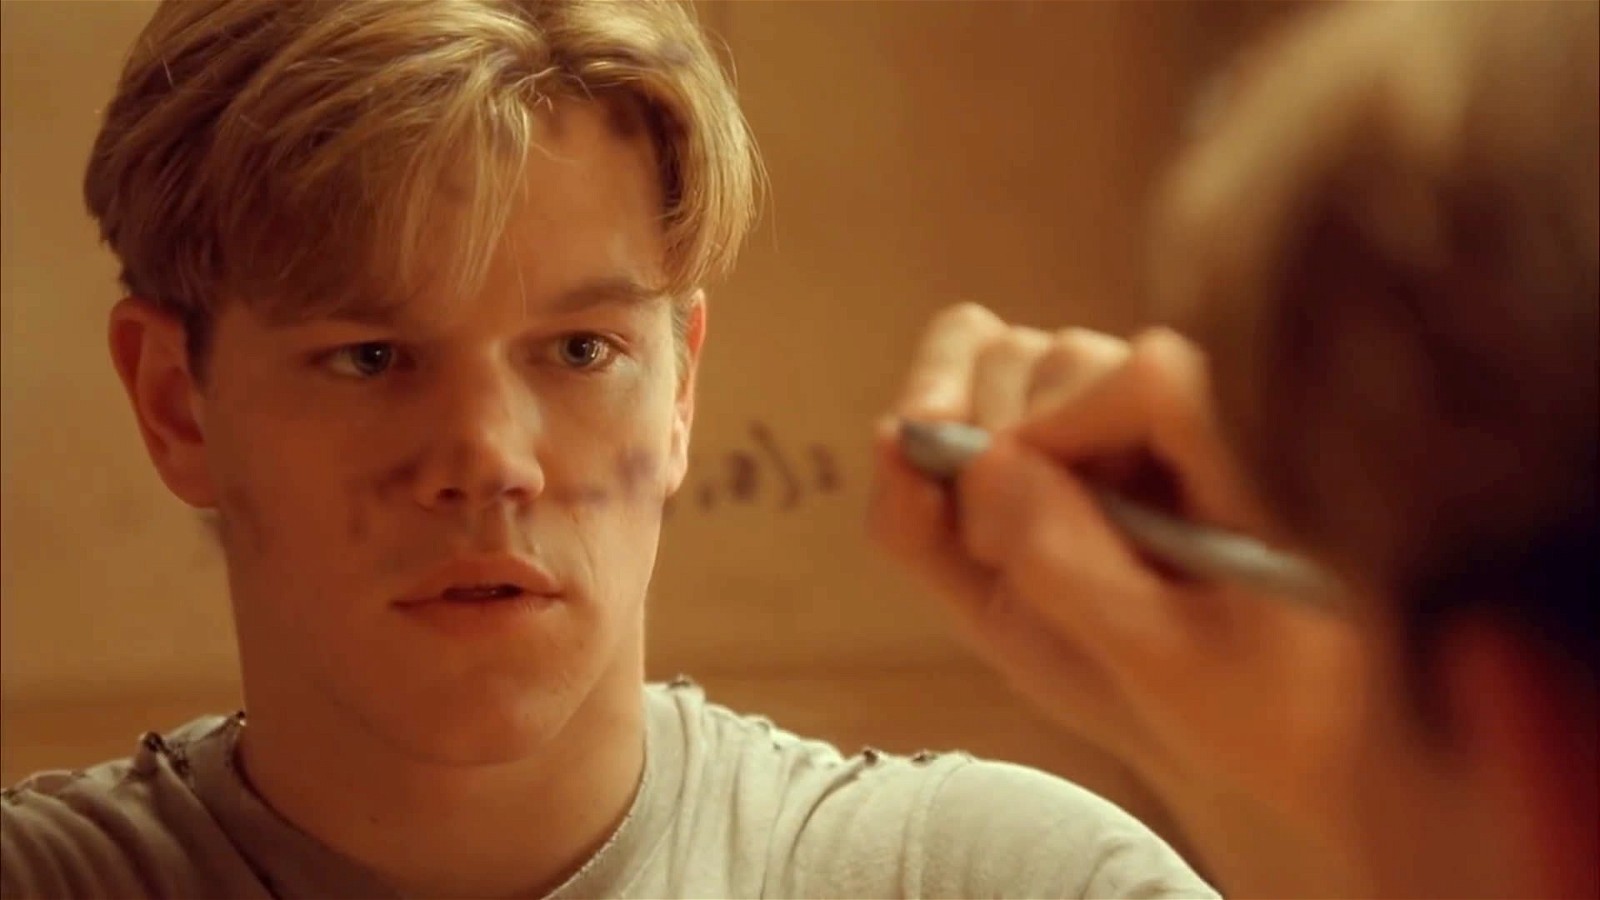 Matt Damon in Good Will Hunting (1997)